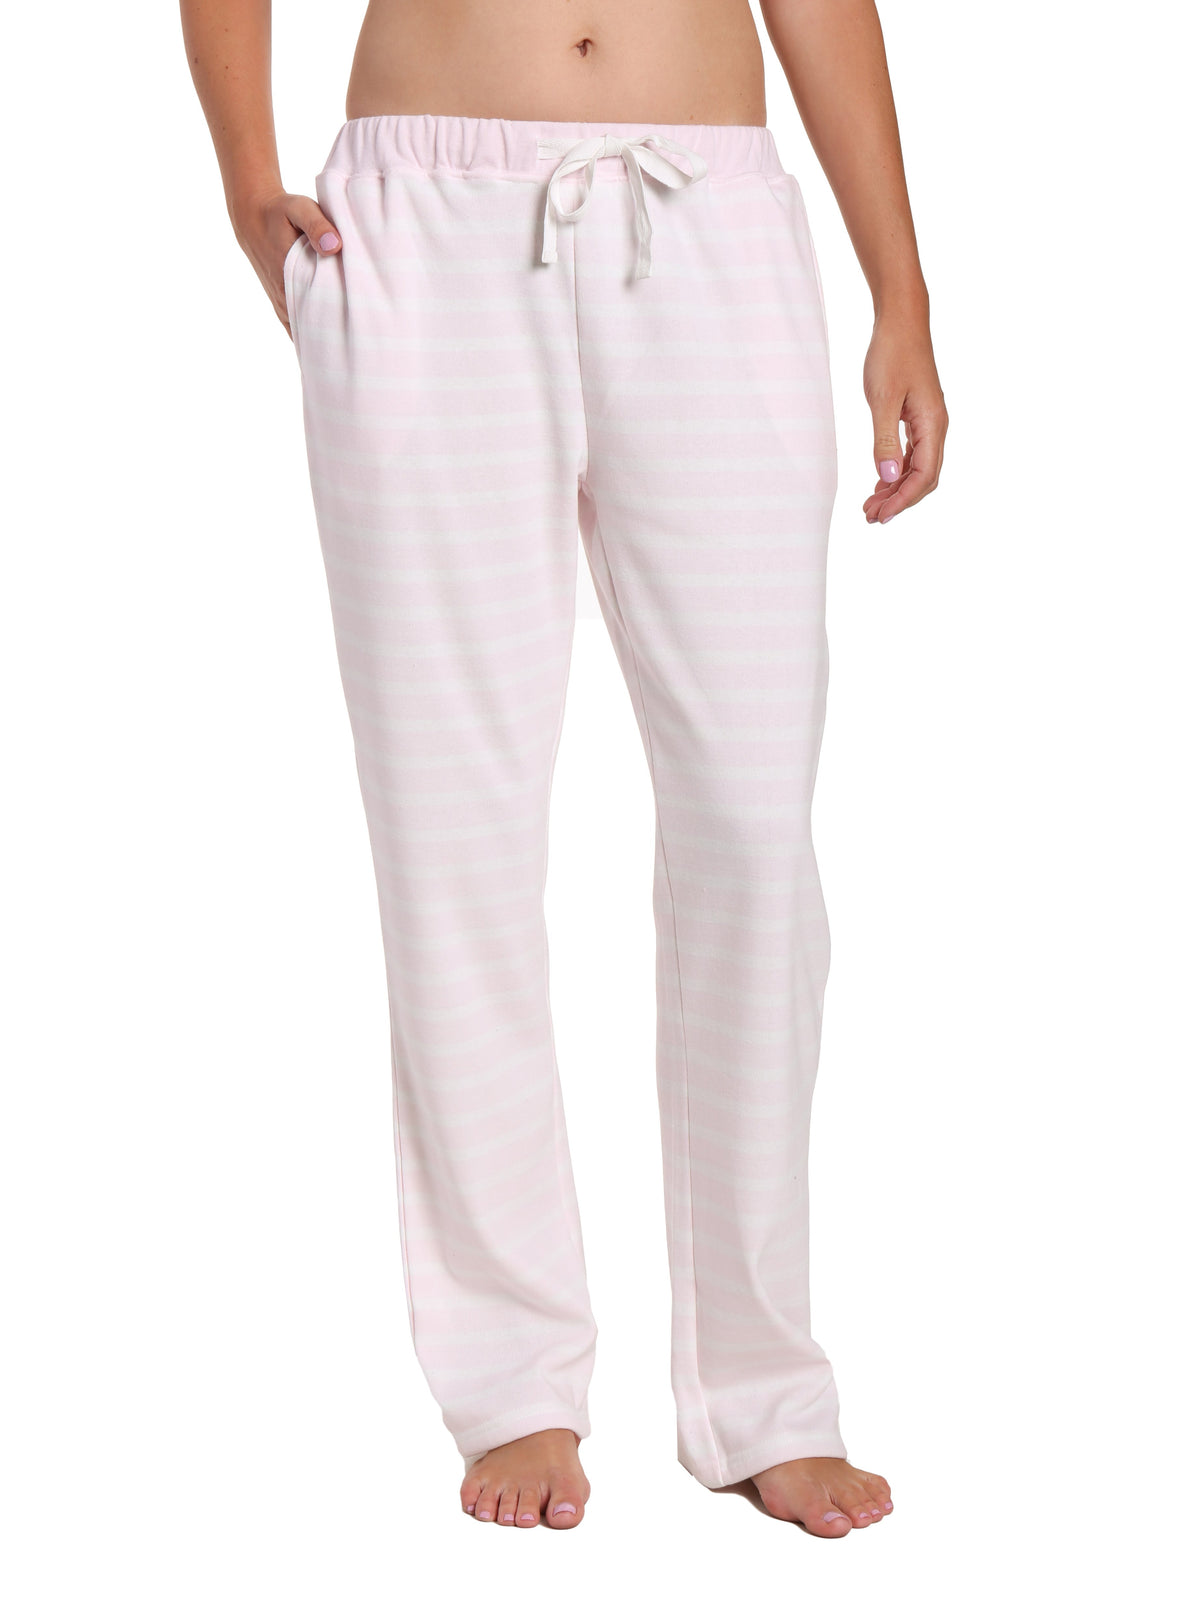 Womens Towel Brushed Sweatpants - Stripes Pink White